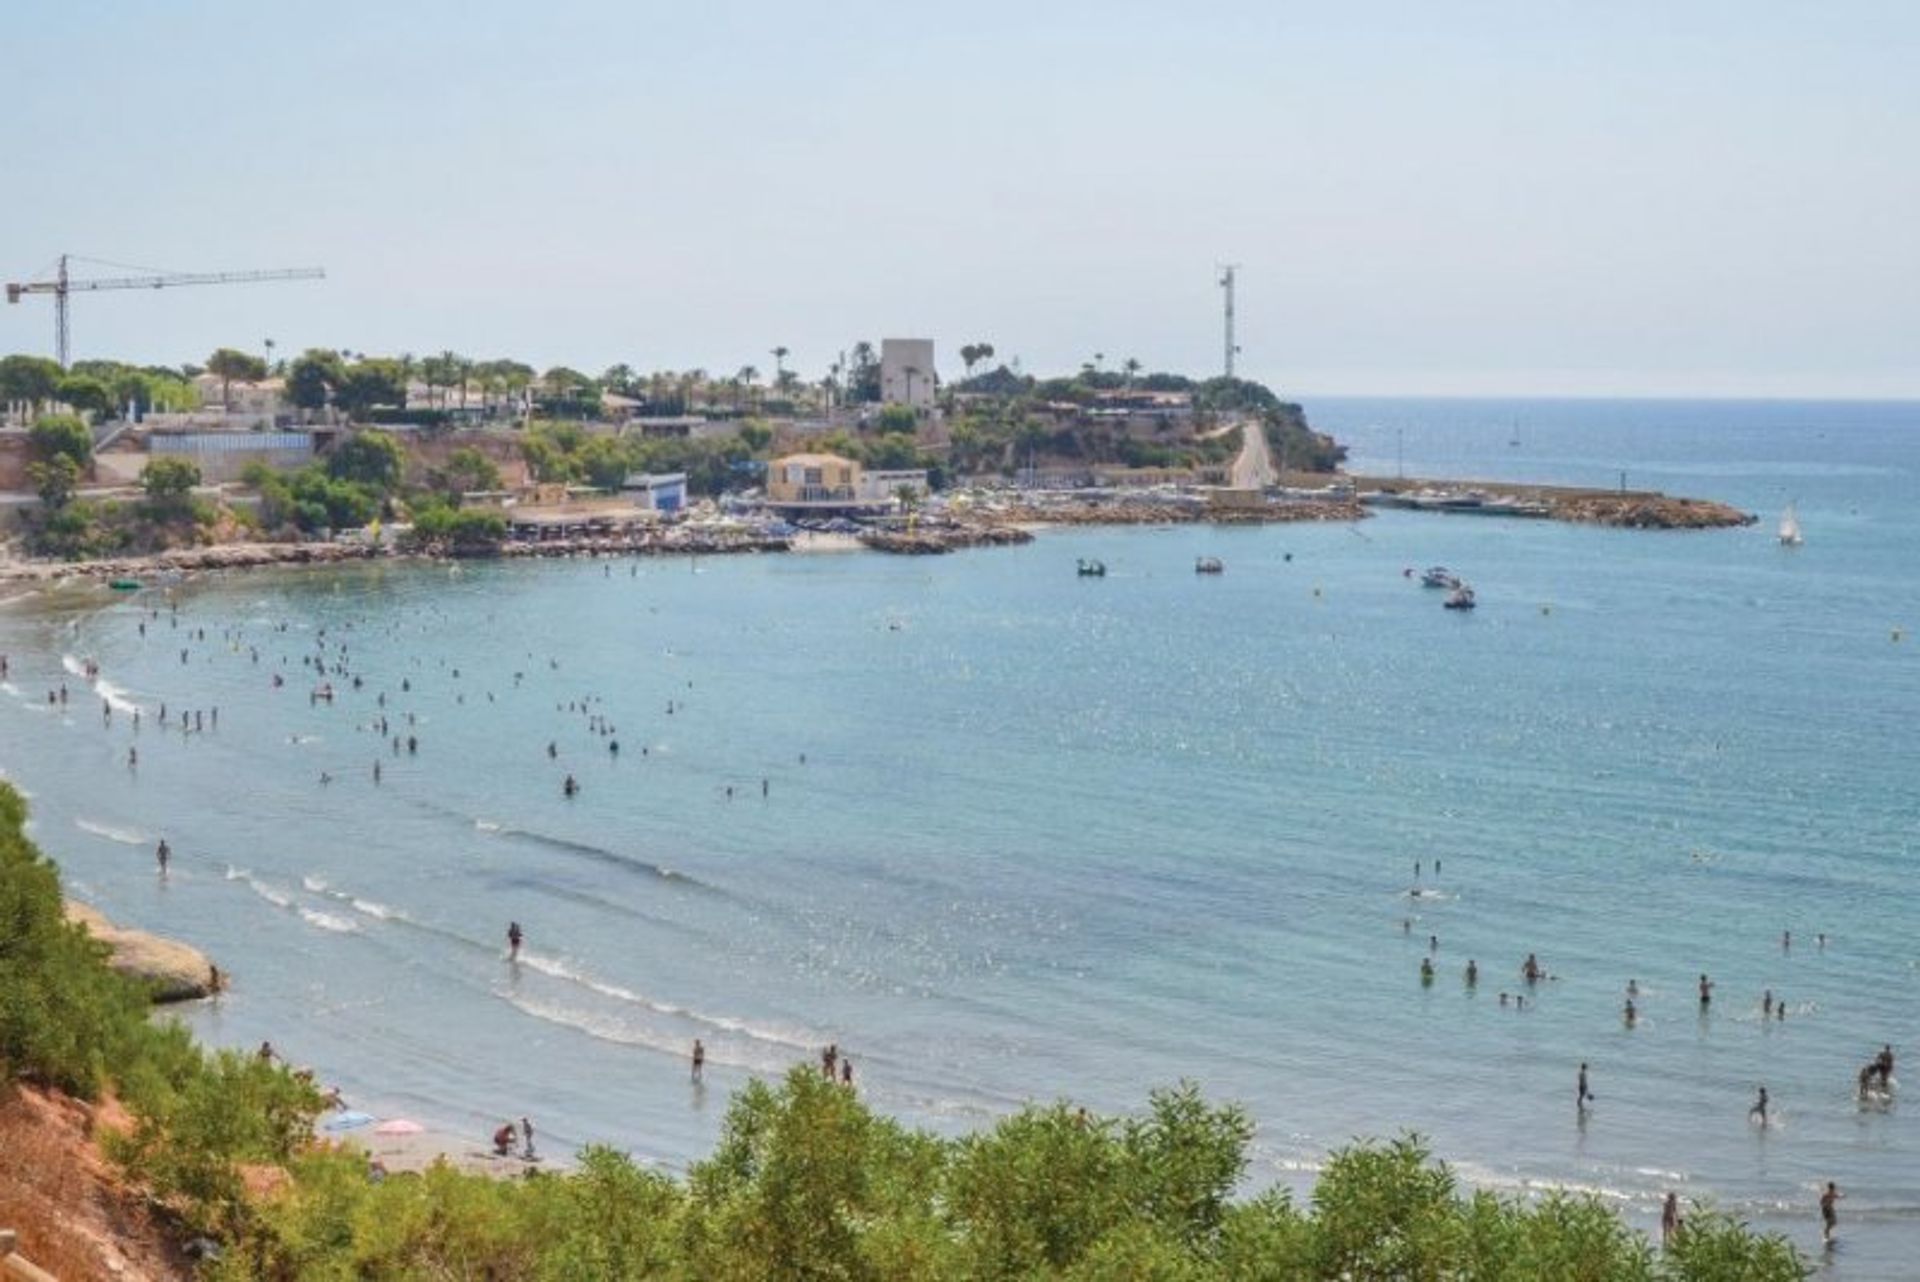 People watch, sunbathe or just sit and relax under the Mediterranean sun on La Zenia's Cala Cerrada beach